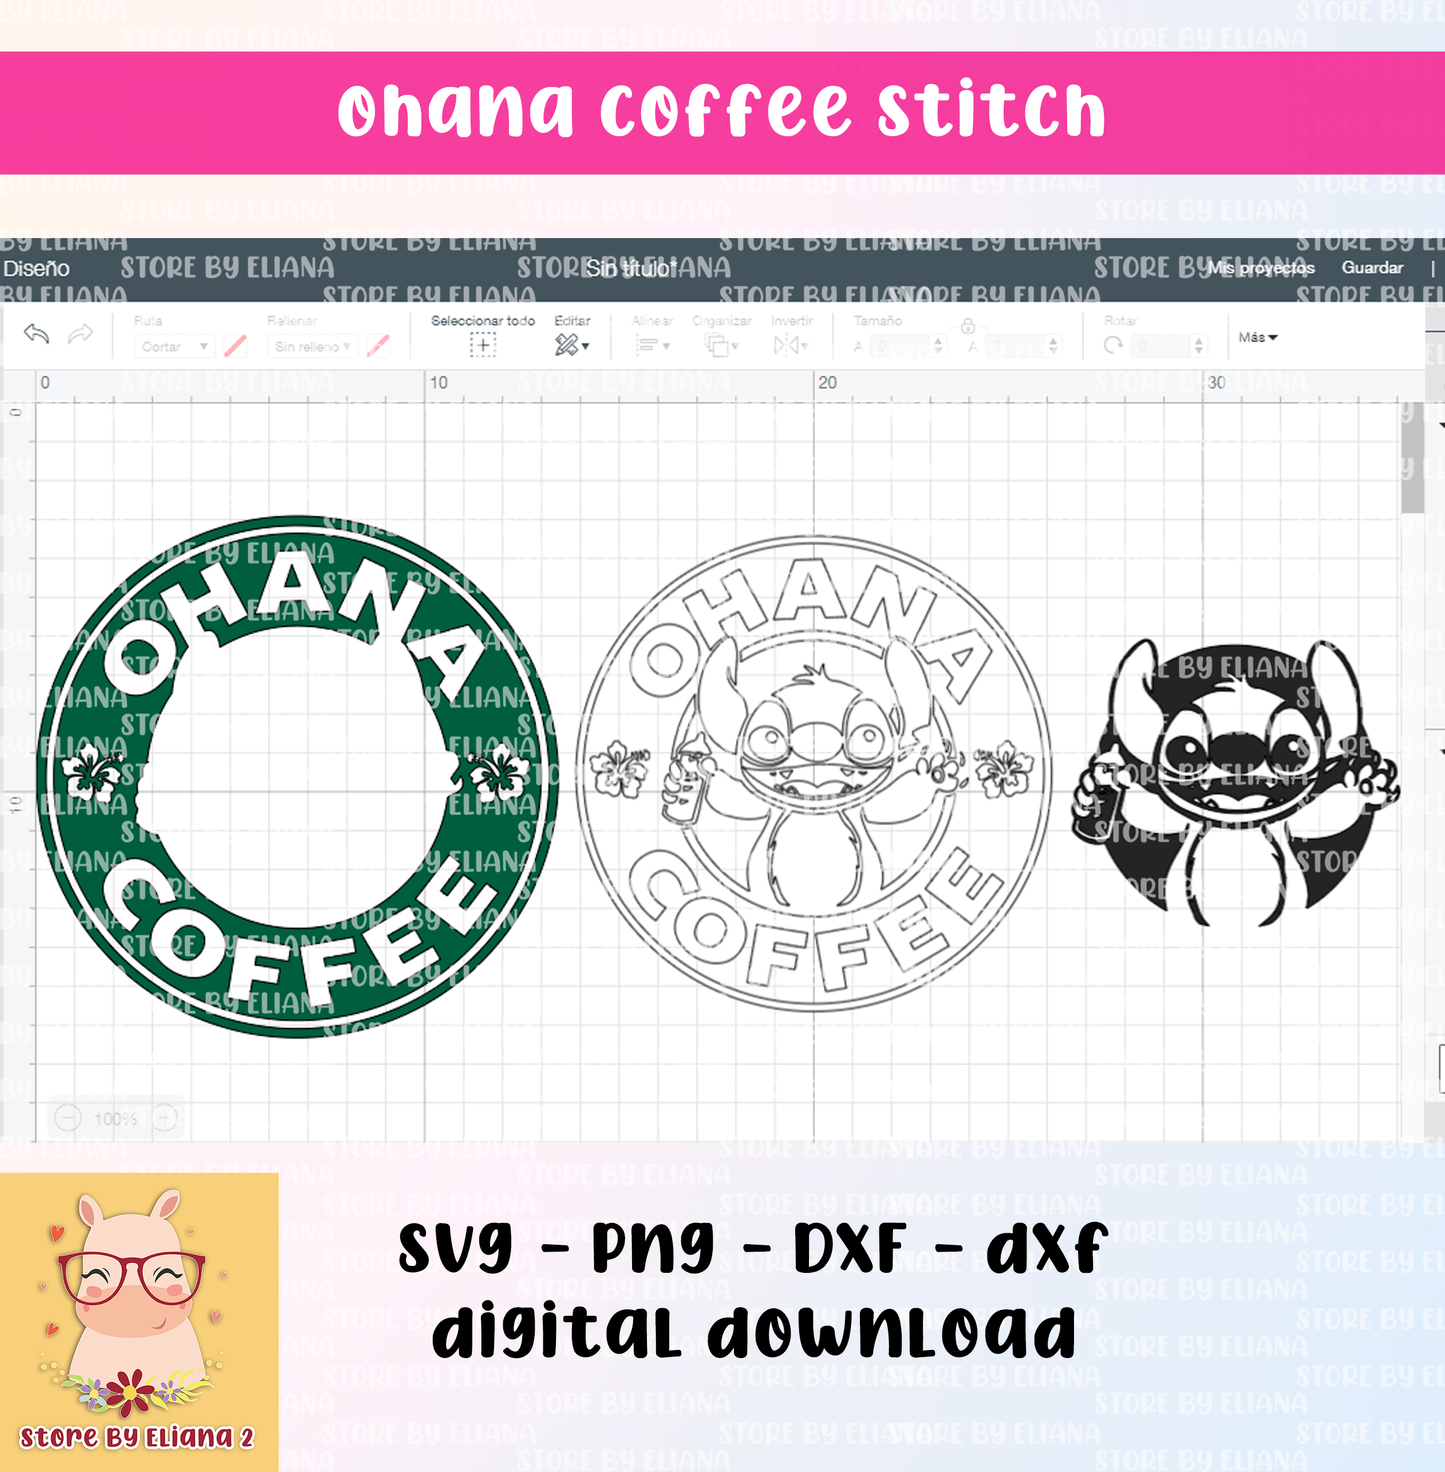 Ohana coffee stitch starbucks svg, png, cricut, cut file, instant download, stitch svg